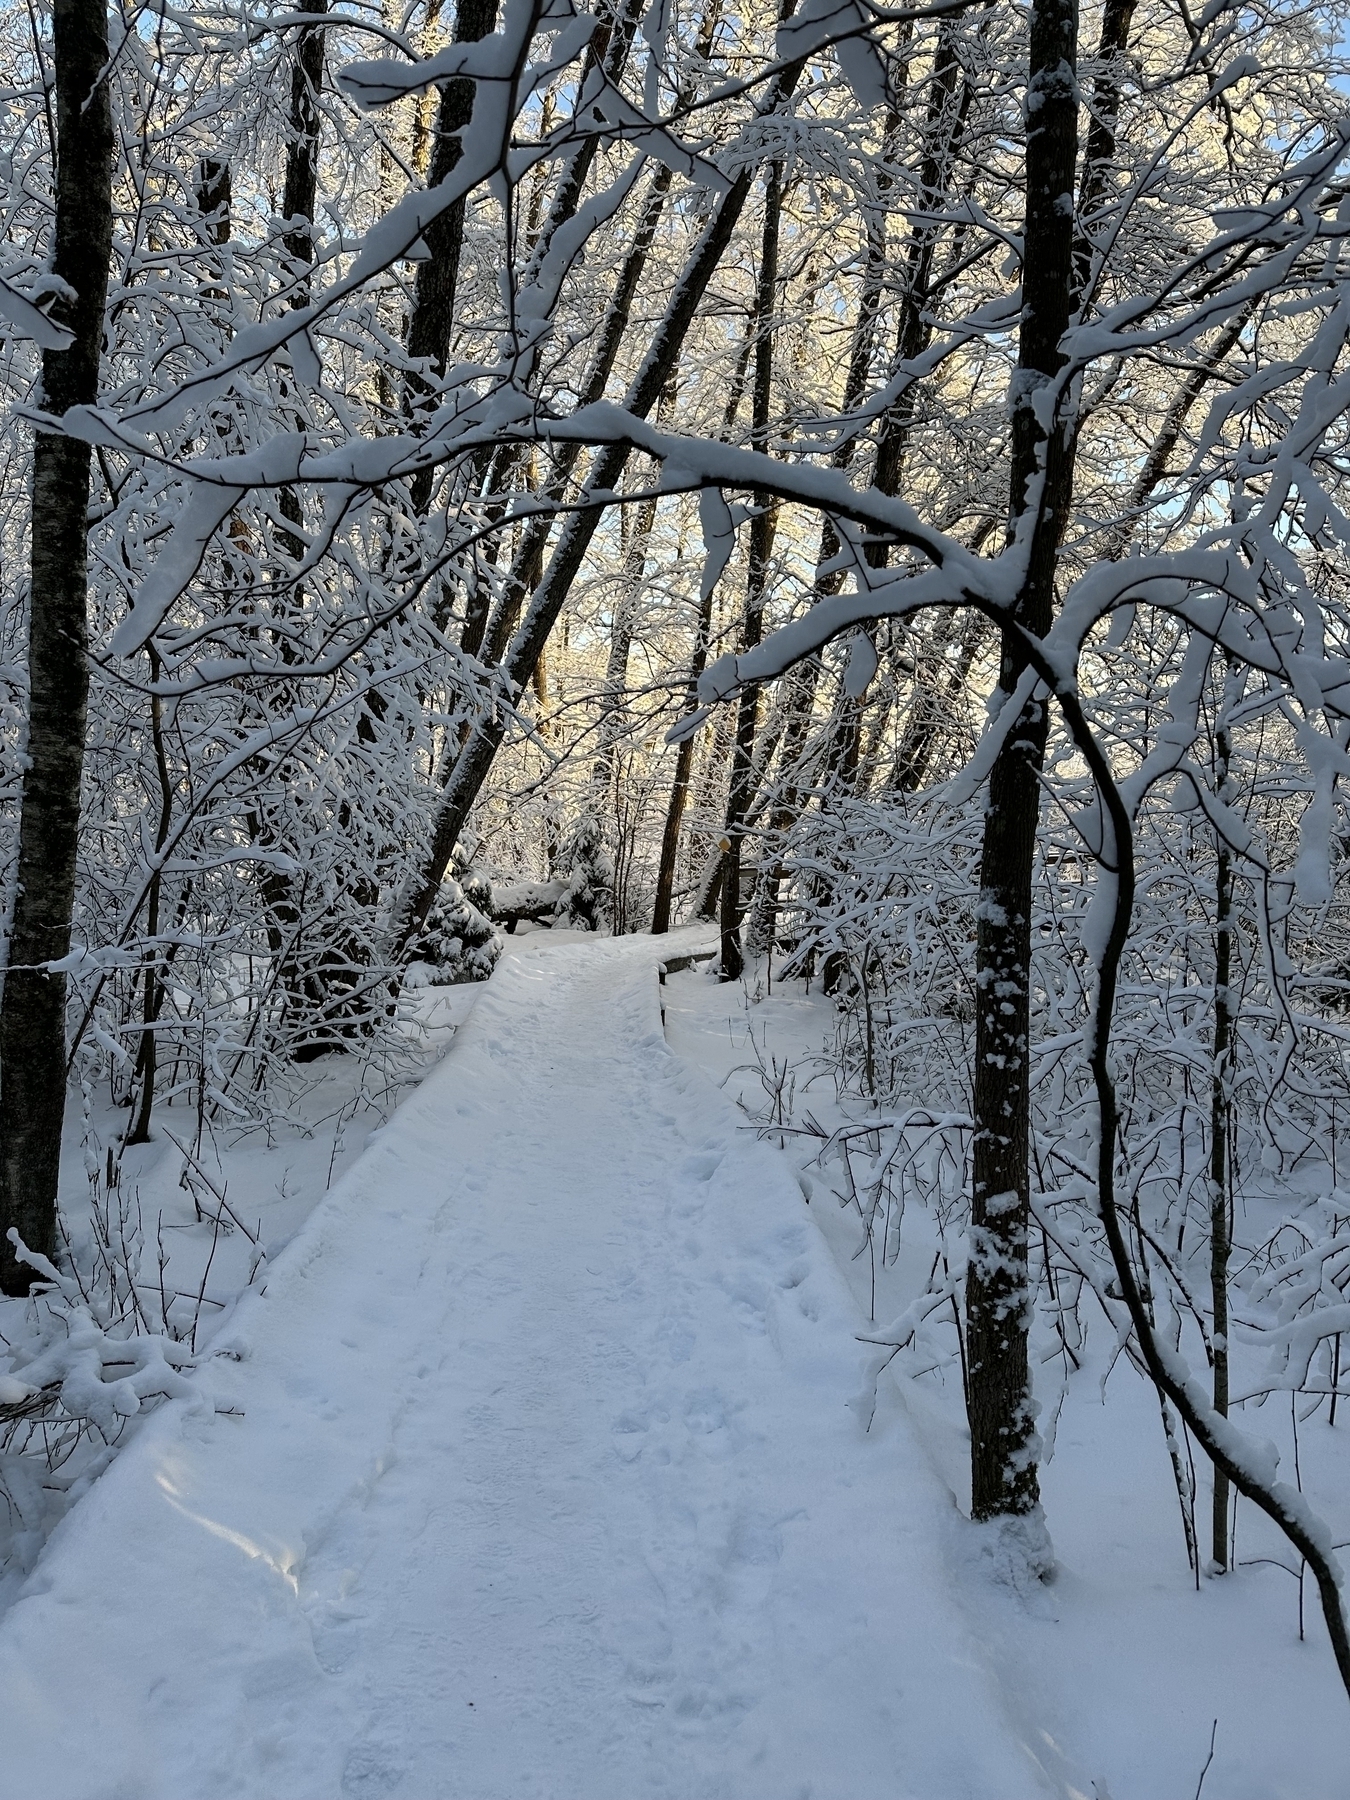 Pathway through snowy trees, trees bending over the pathway. Winter sun peeking through the trees